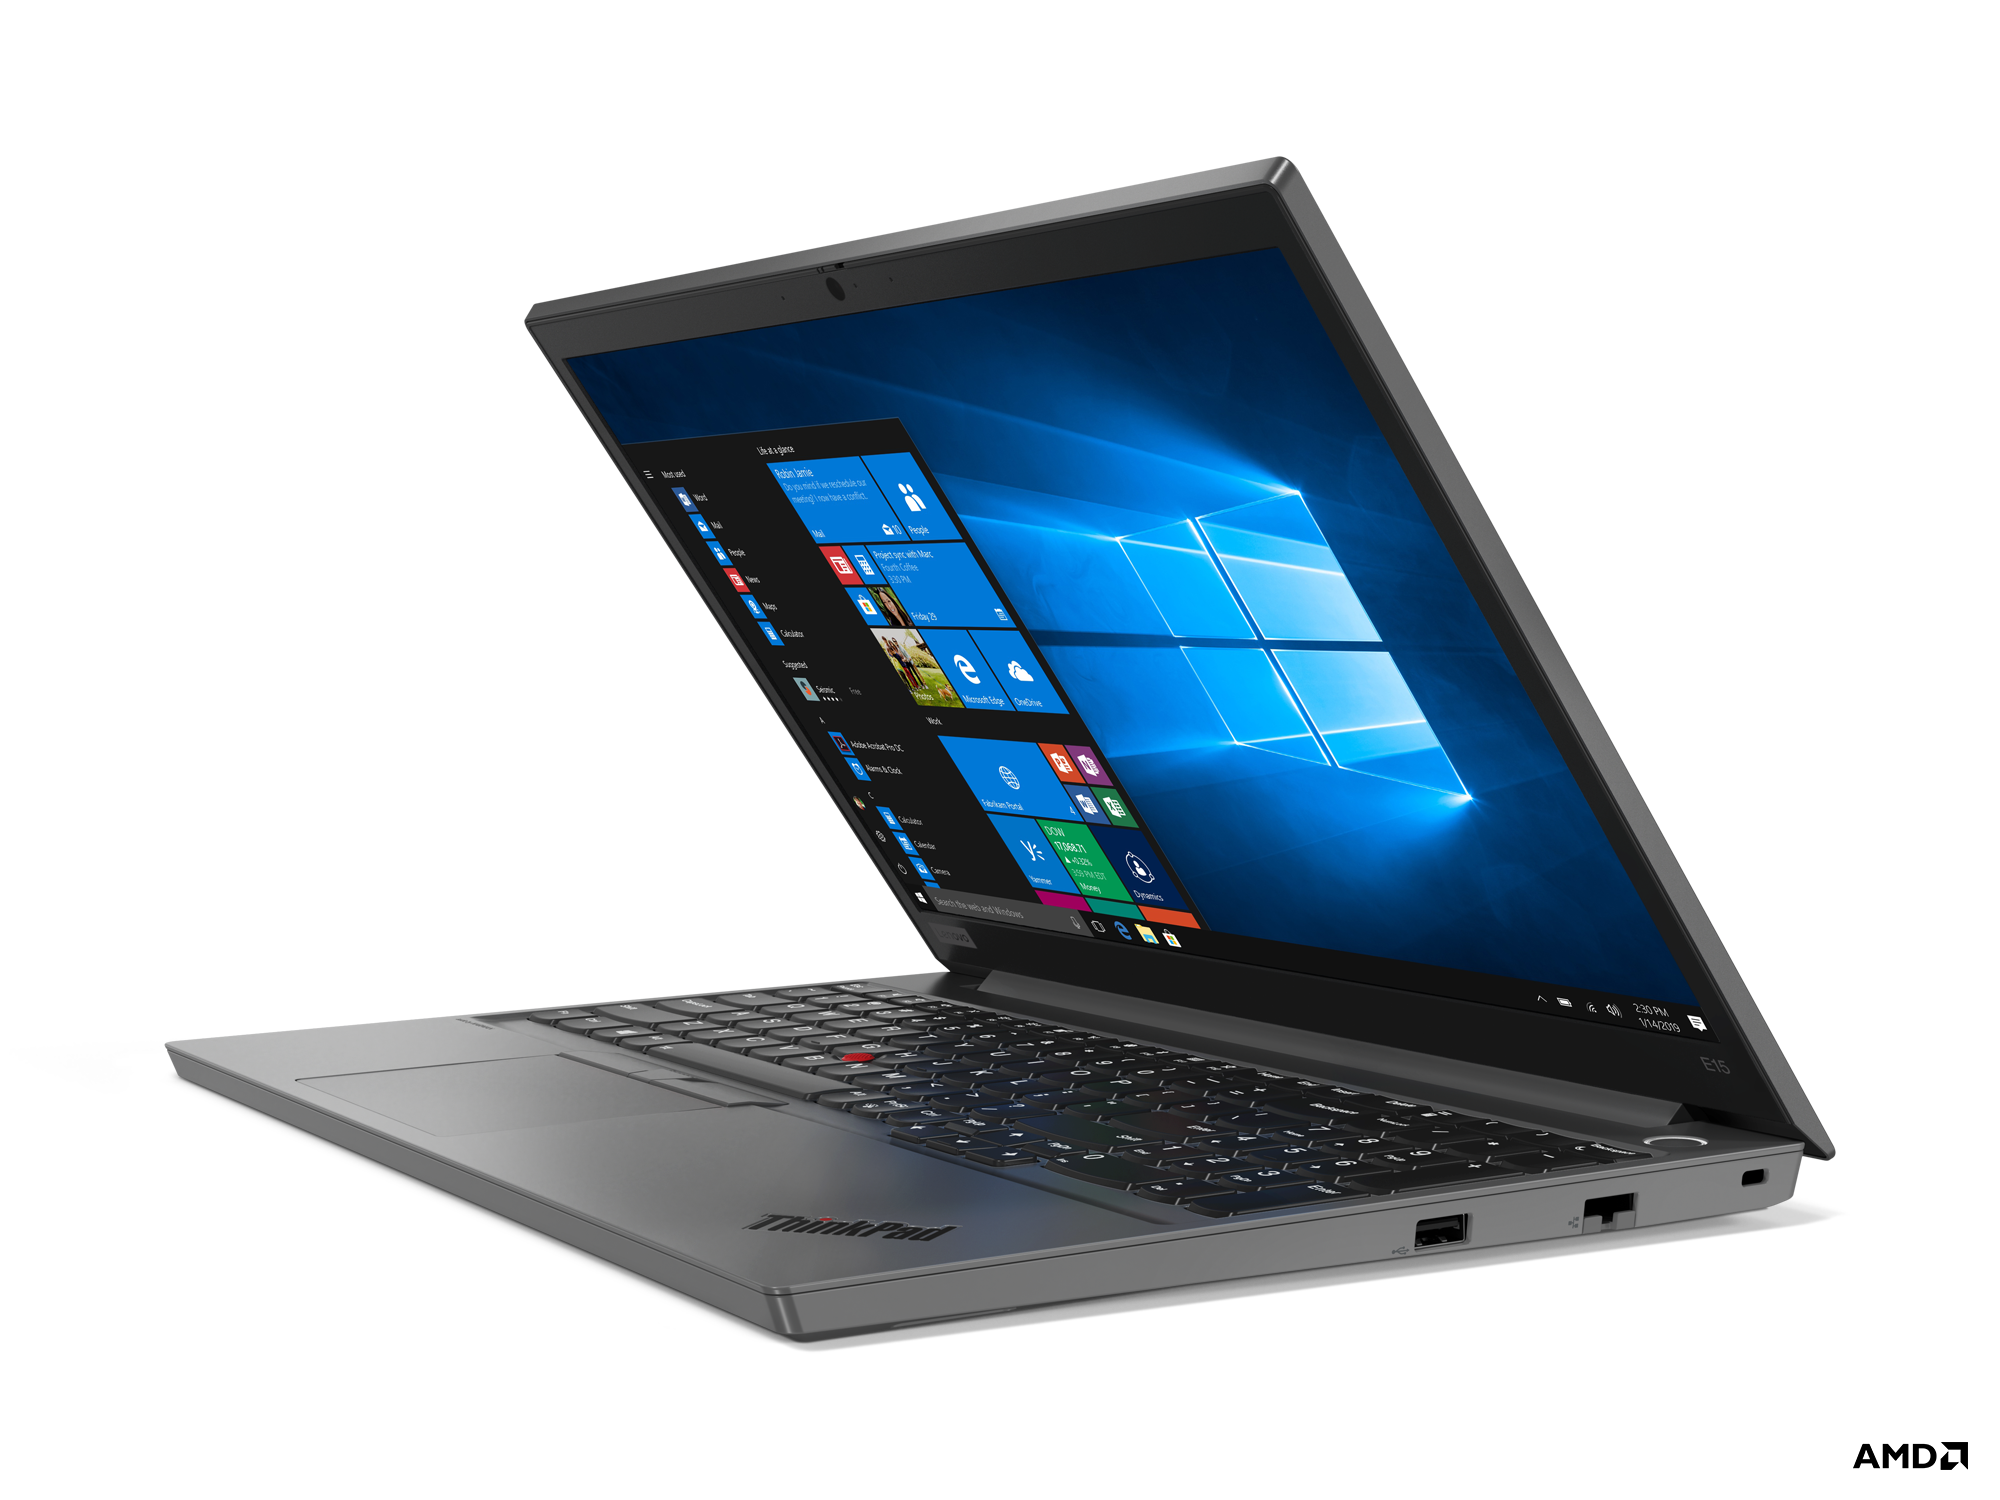 Lenovo ThinkPad E15 laptop